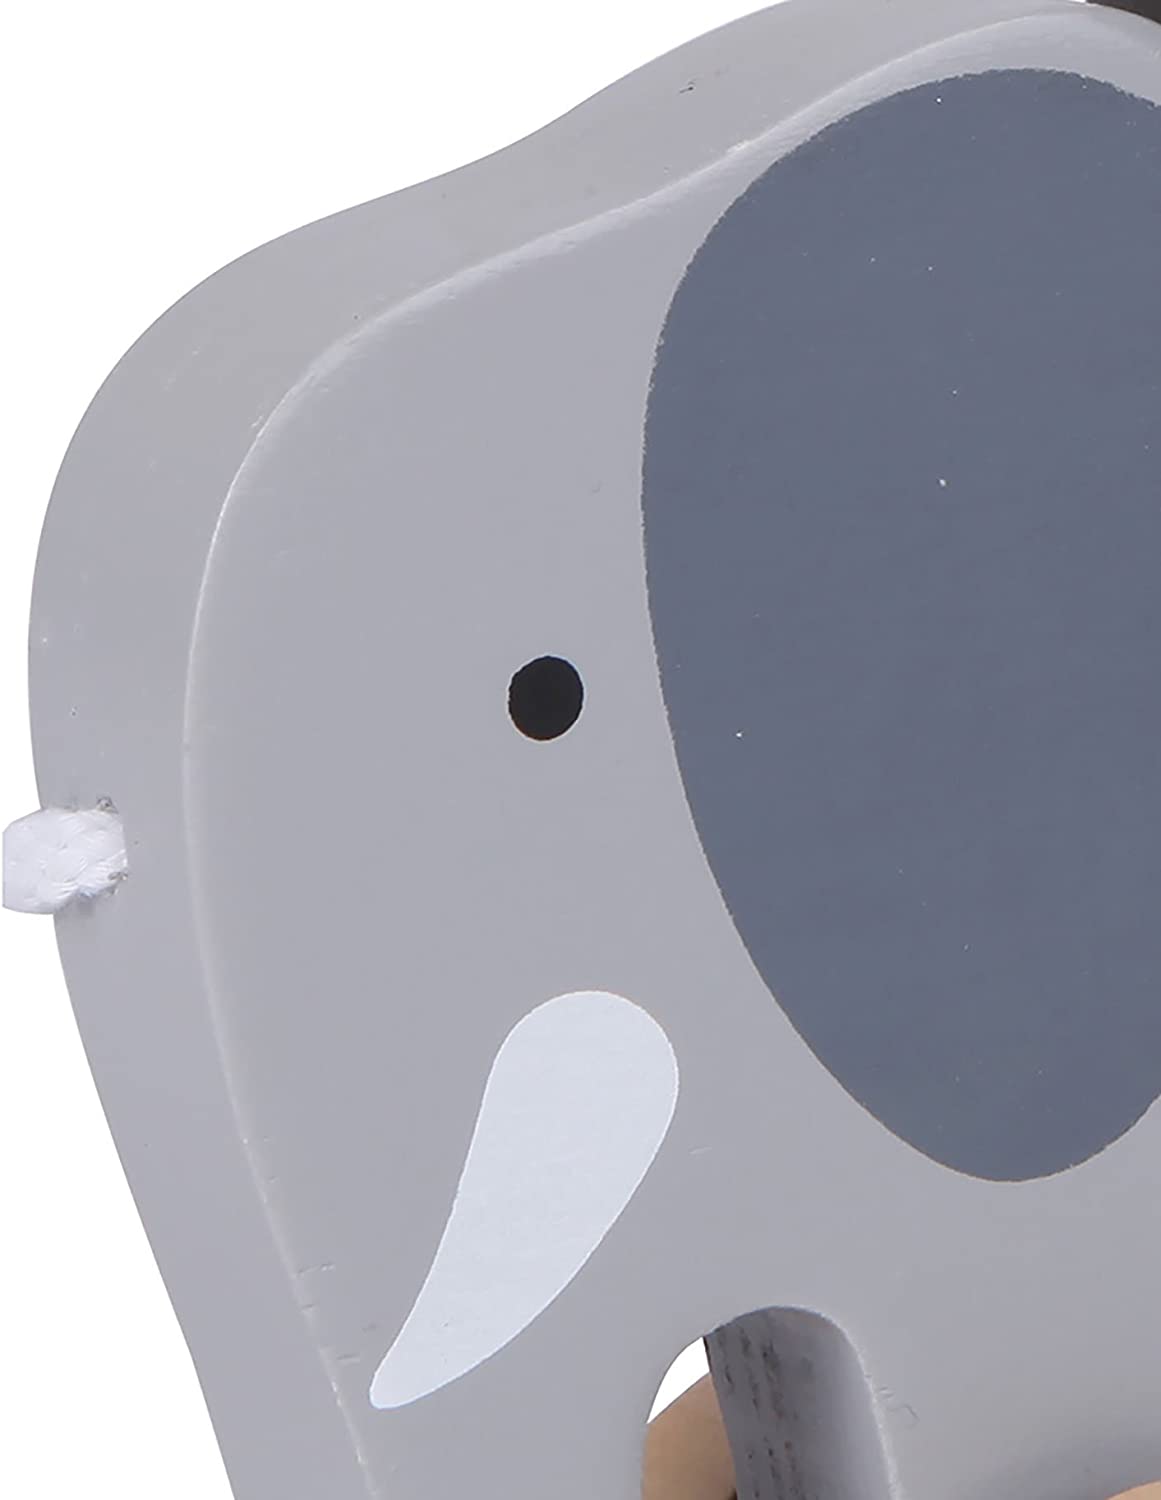 (Elephant) - Hape Elephant Wooden Push and Pull Toddler Toy,Grey - image 2 of 6